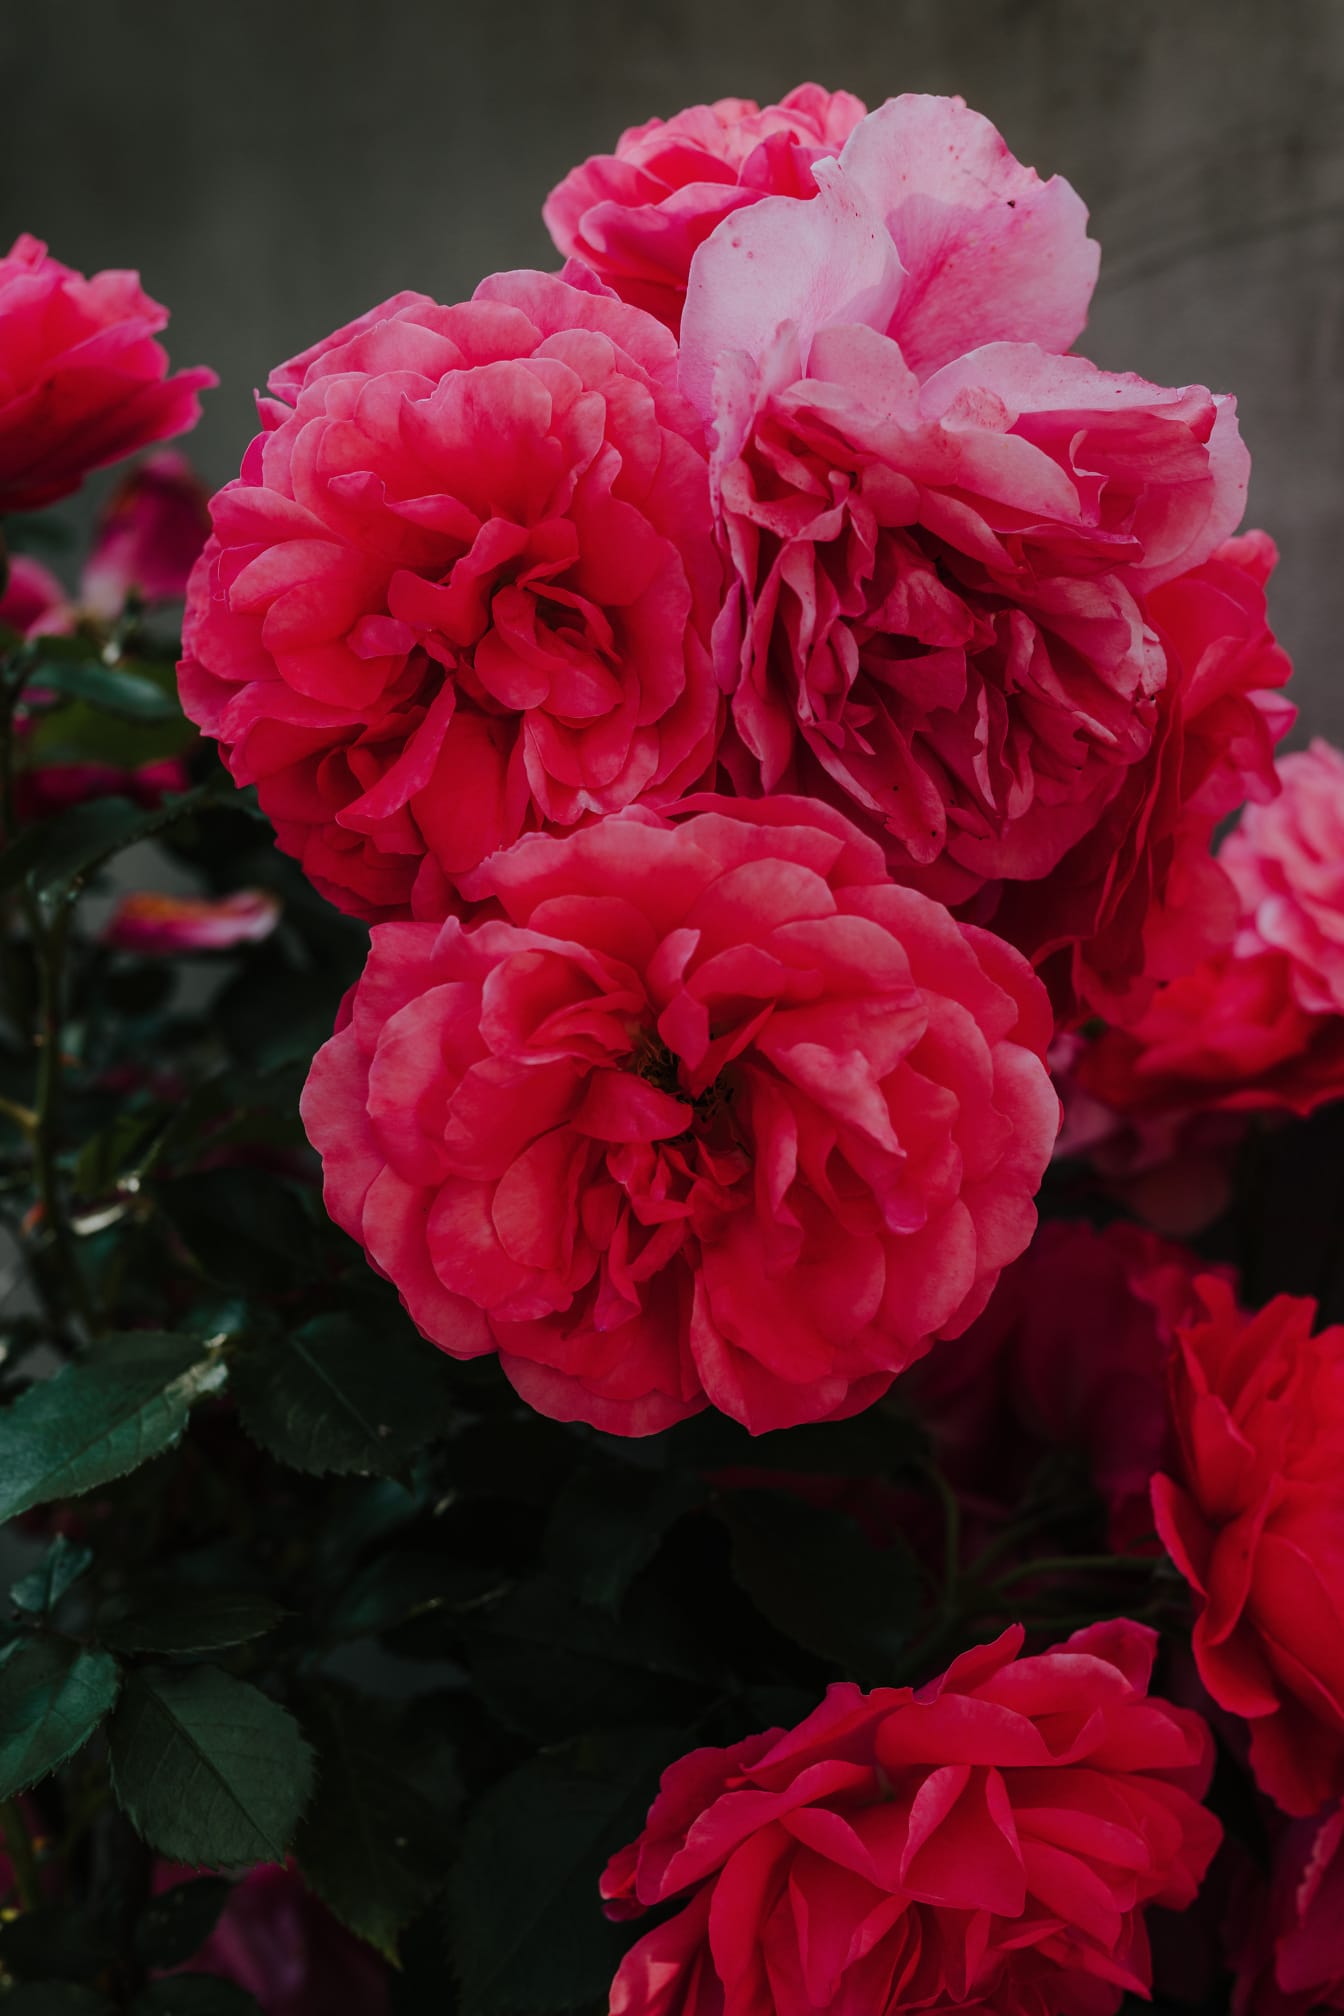 Bunga mawar pastel merah tua mekar close-up